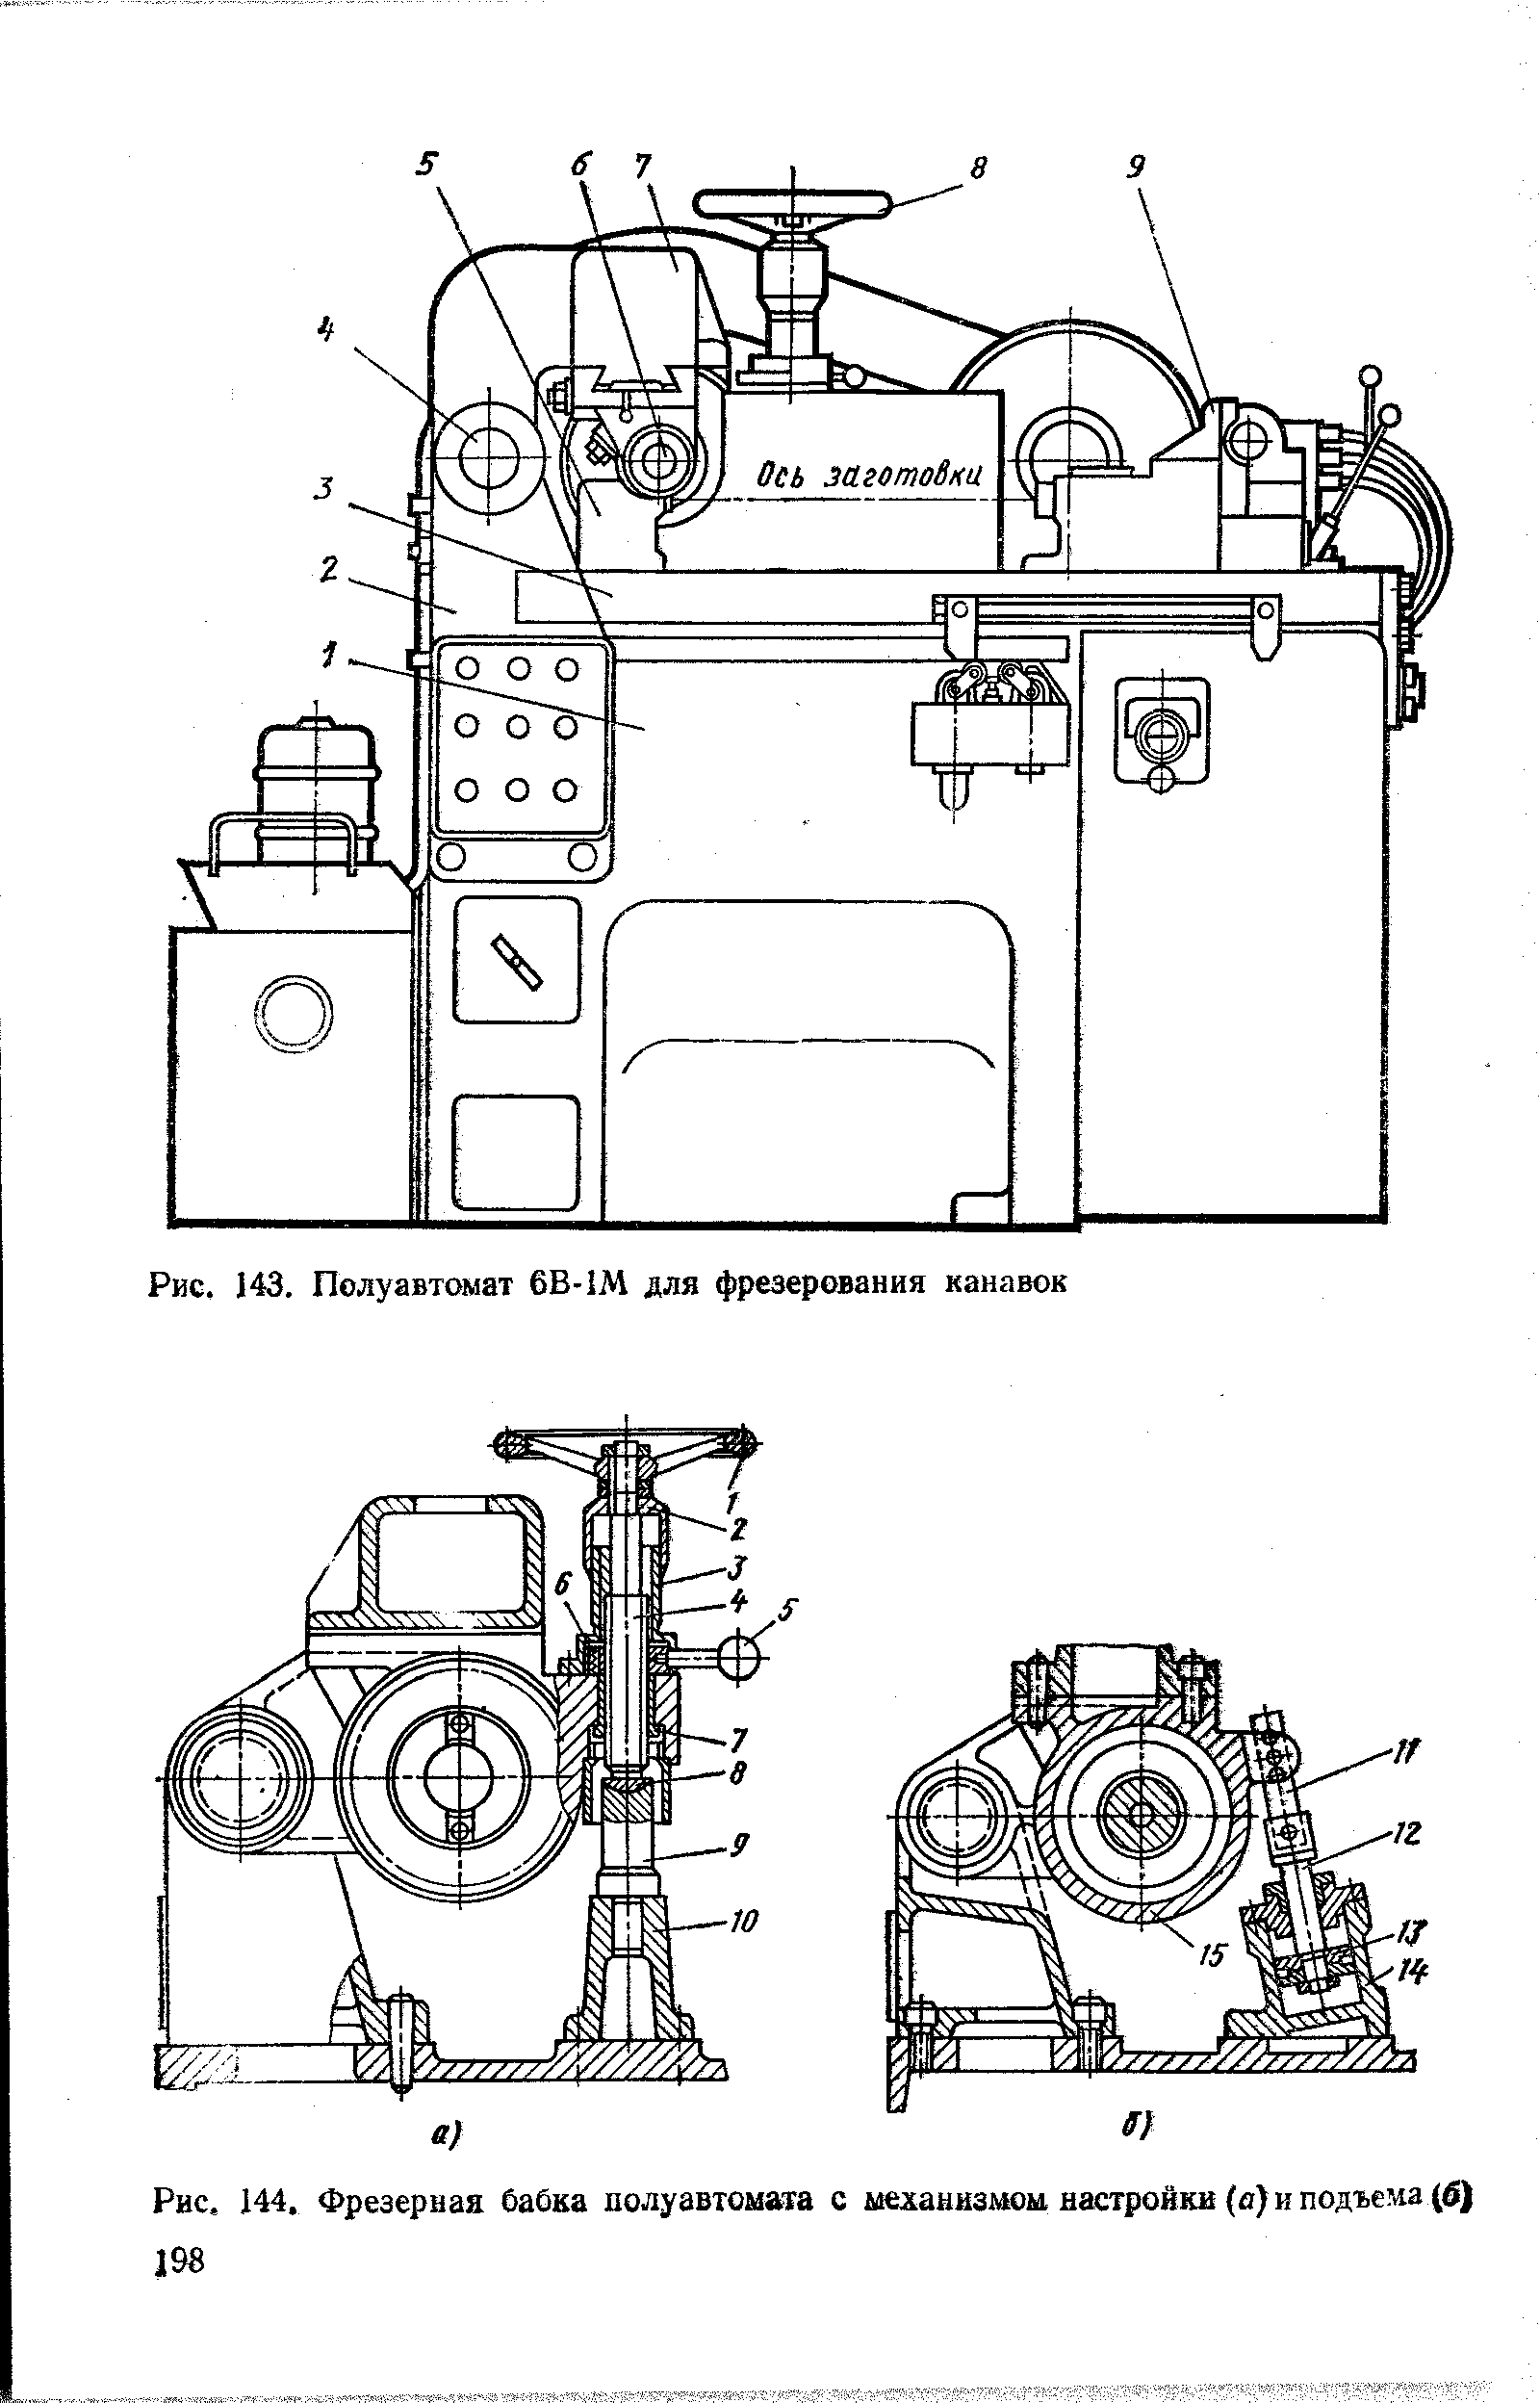 Рис. 144. Фрезерная бабка полуавтомата с механизмом настройки (о> и подъема (б) 198
